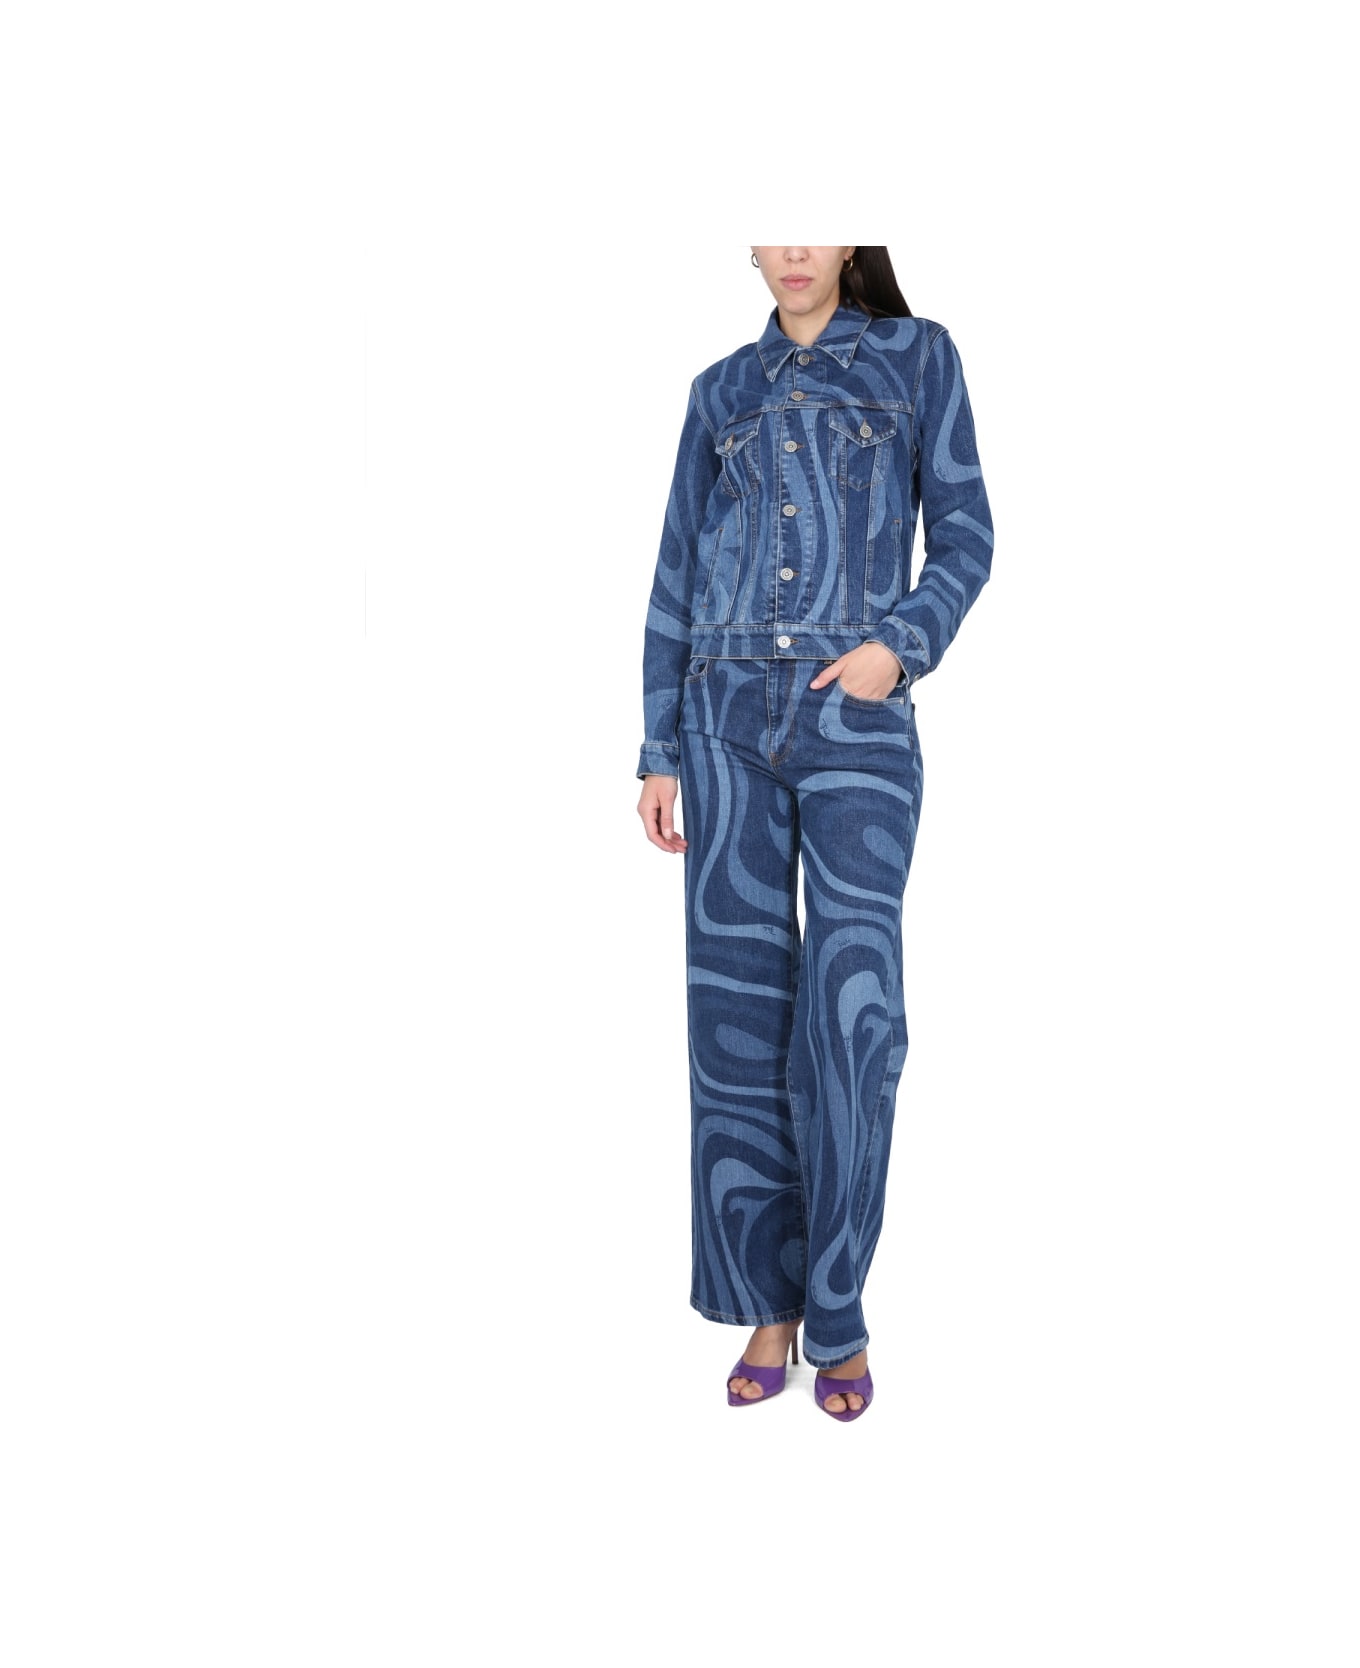 Pucci Marble Print Jacket - BLUE ジャケット